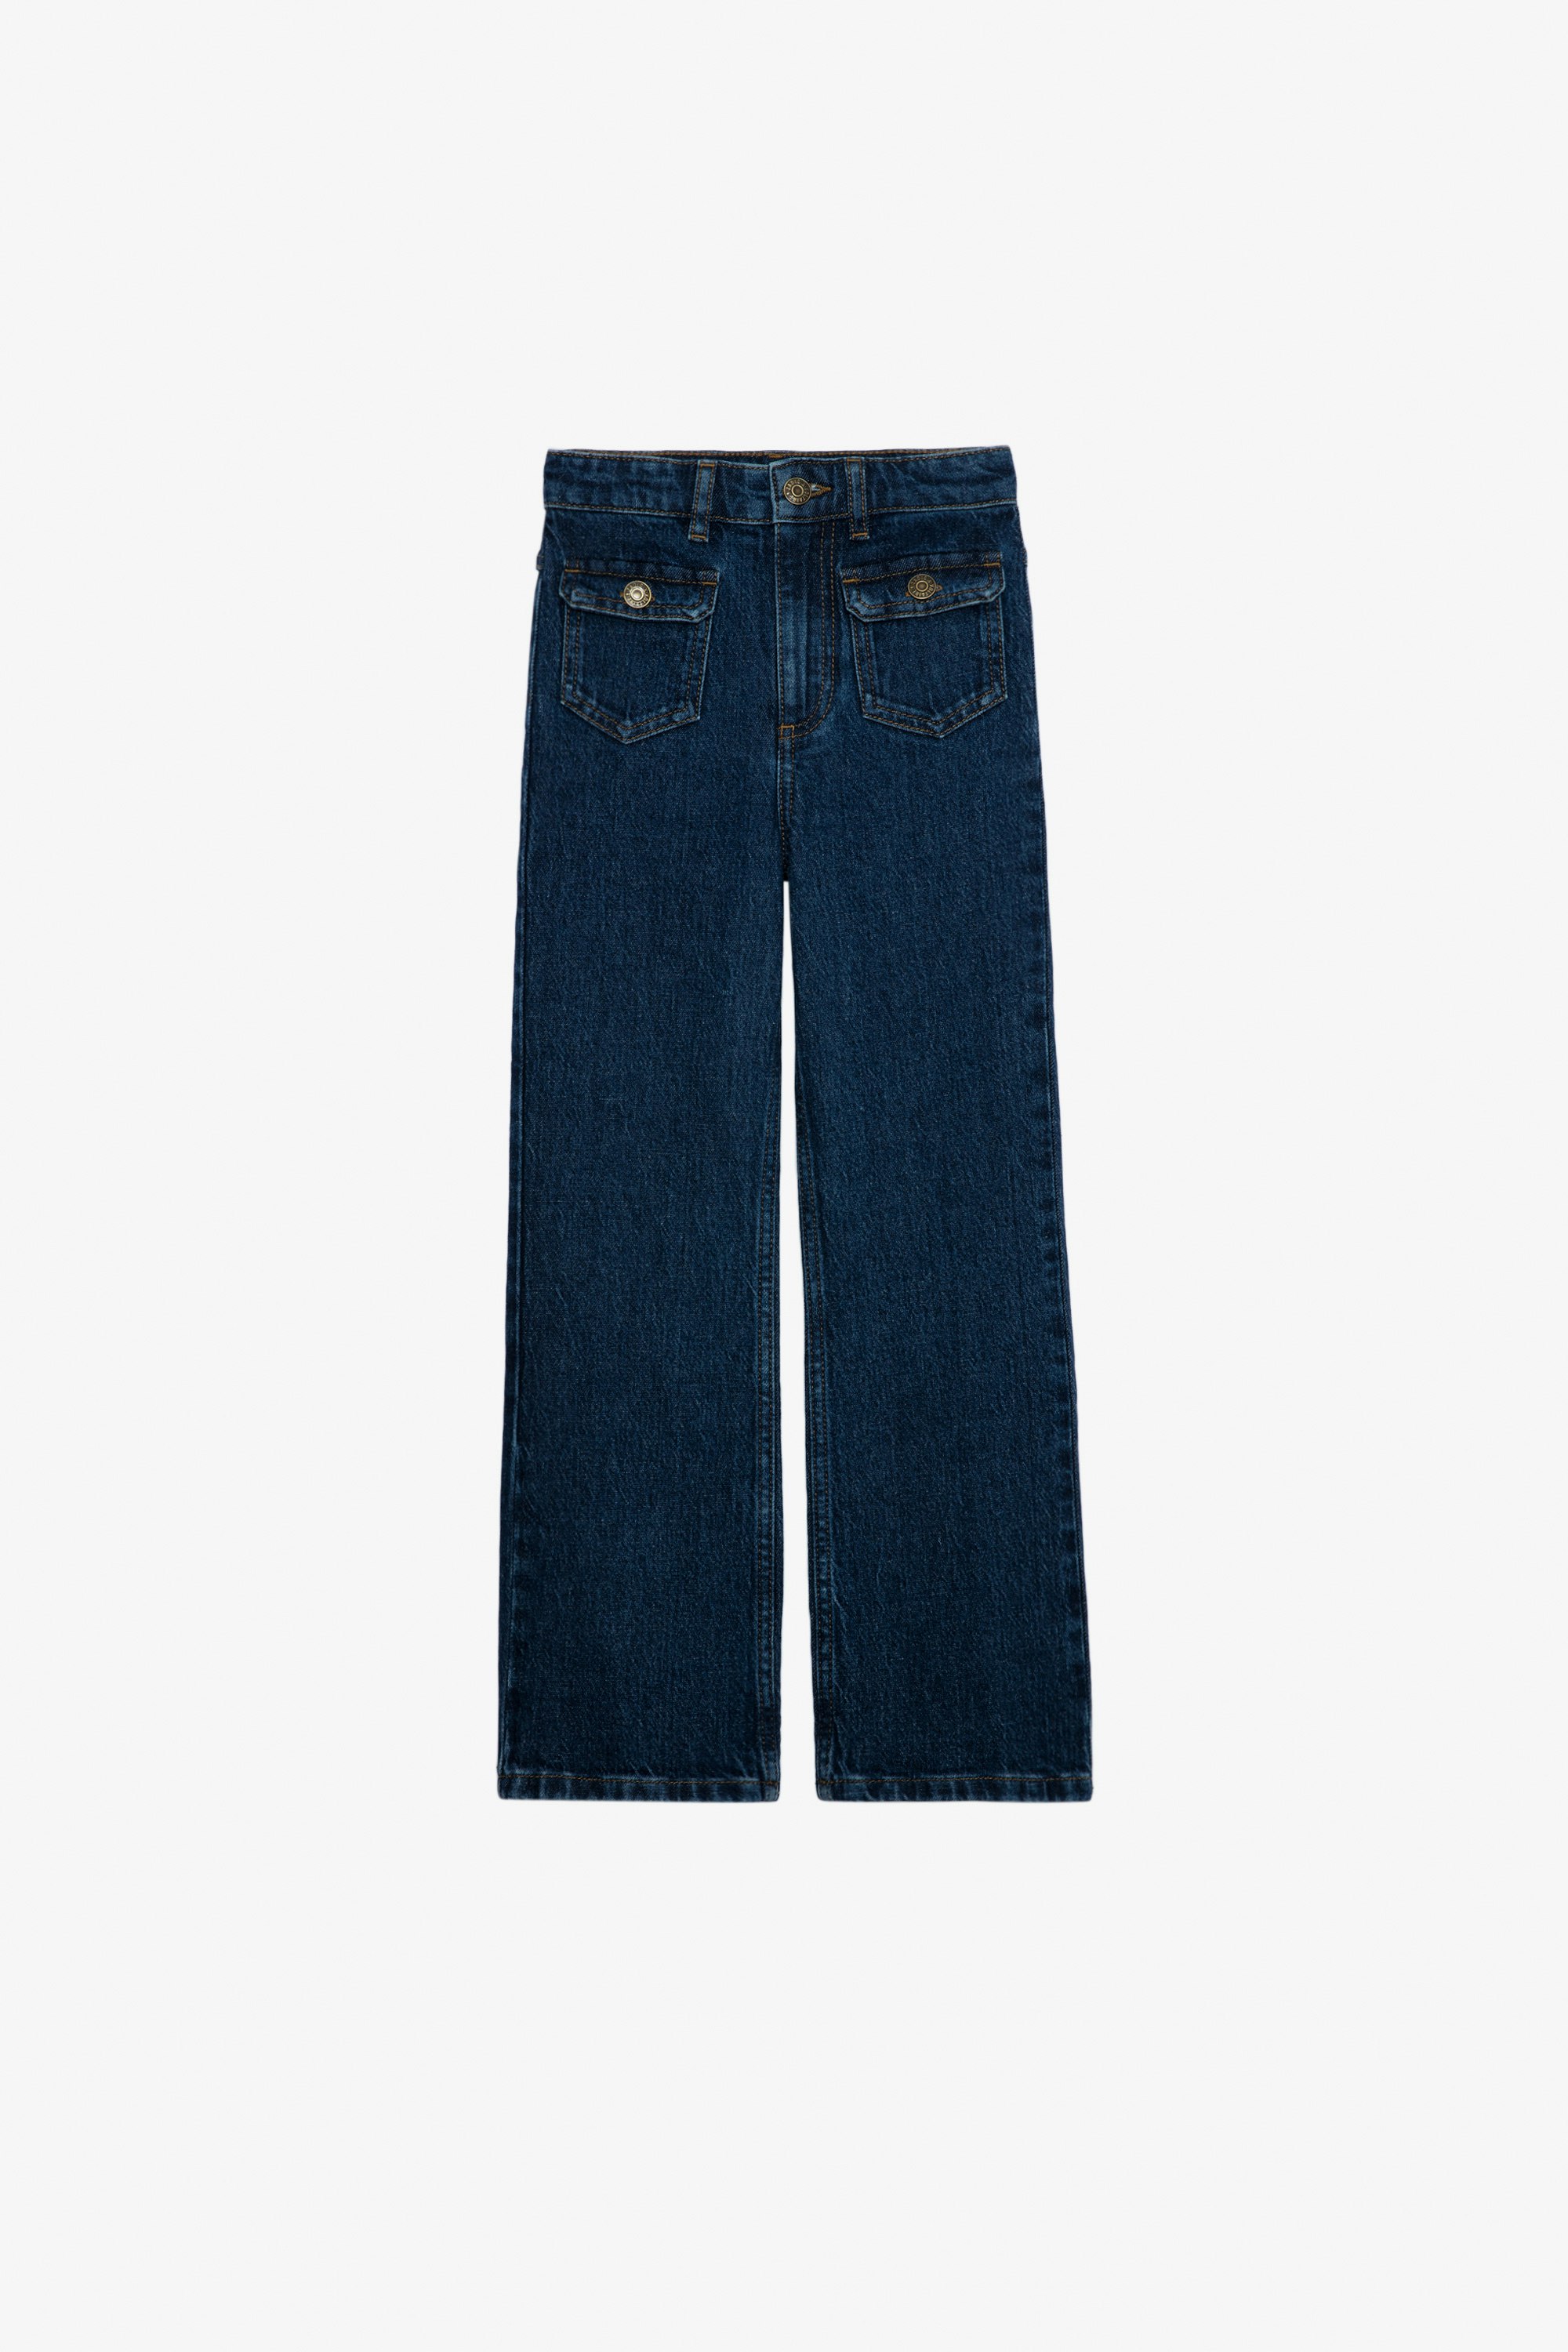 Hippie Girls’ Jeans Girls’ raw denim flared jeans.